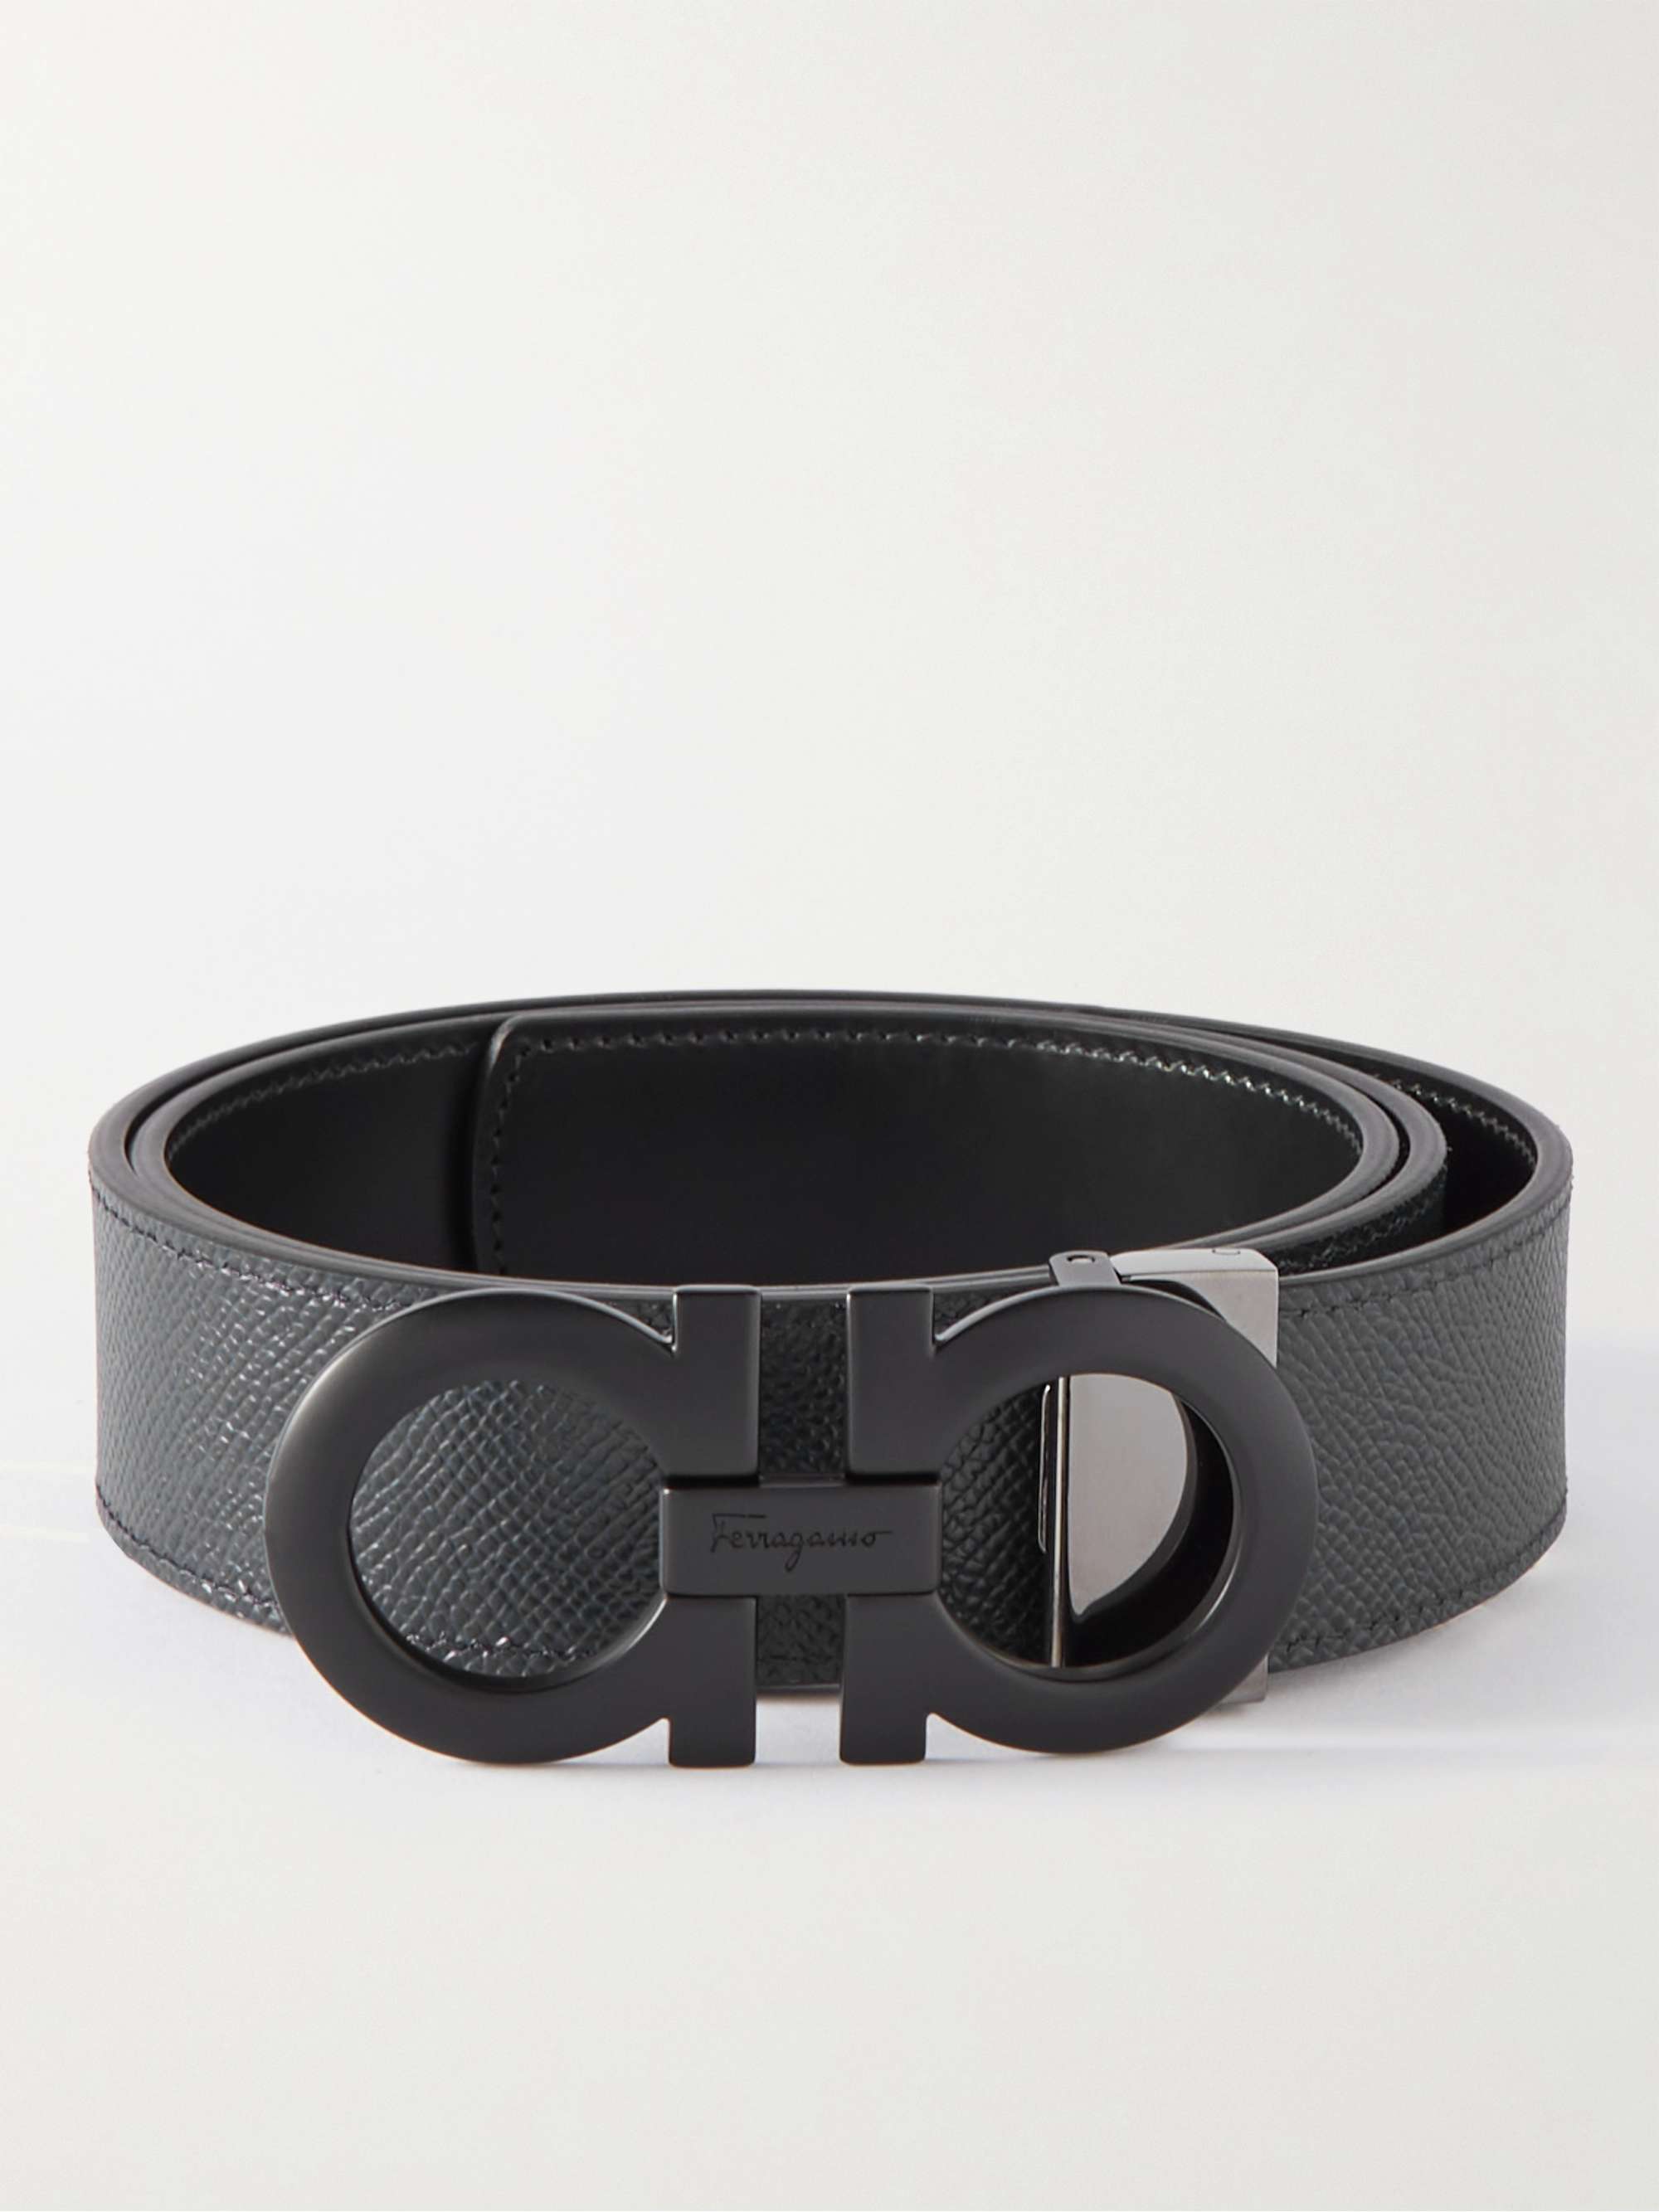 . 43.31 Leather belt Azzaronavy black 110 cm 1.38 35 mm